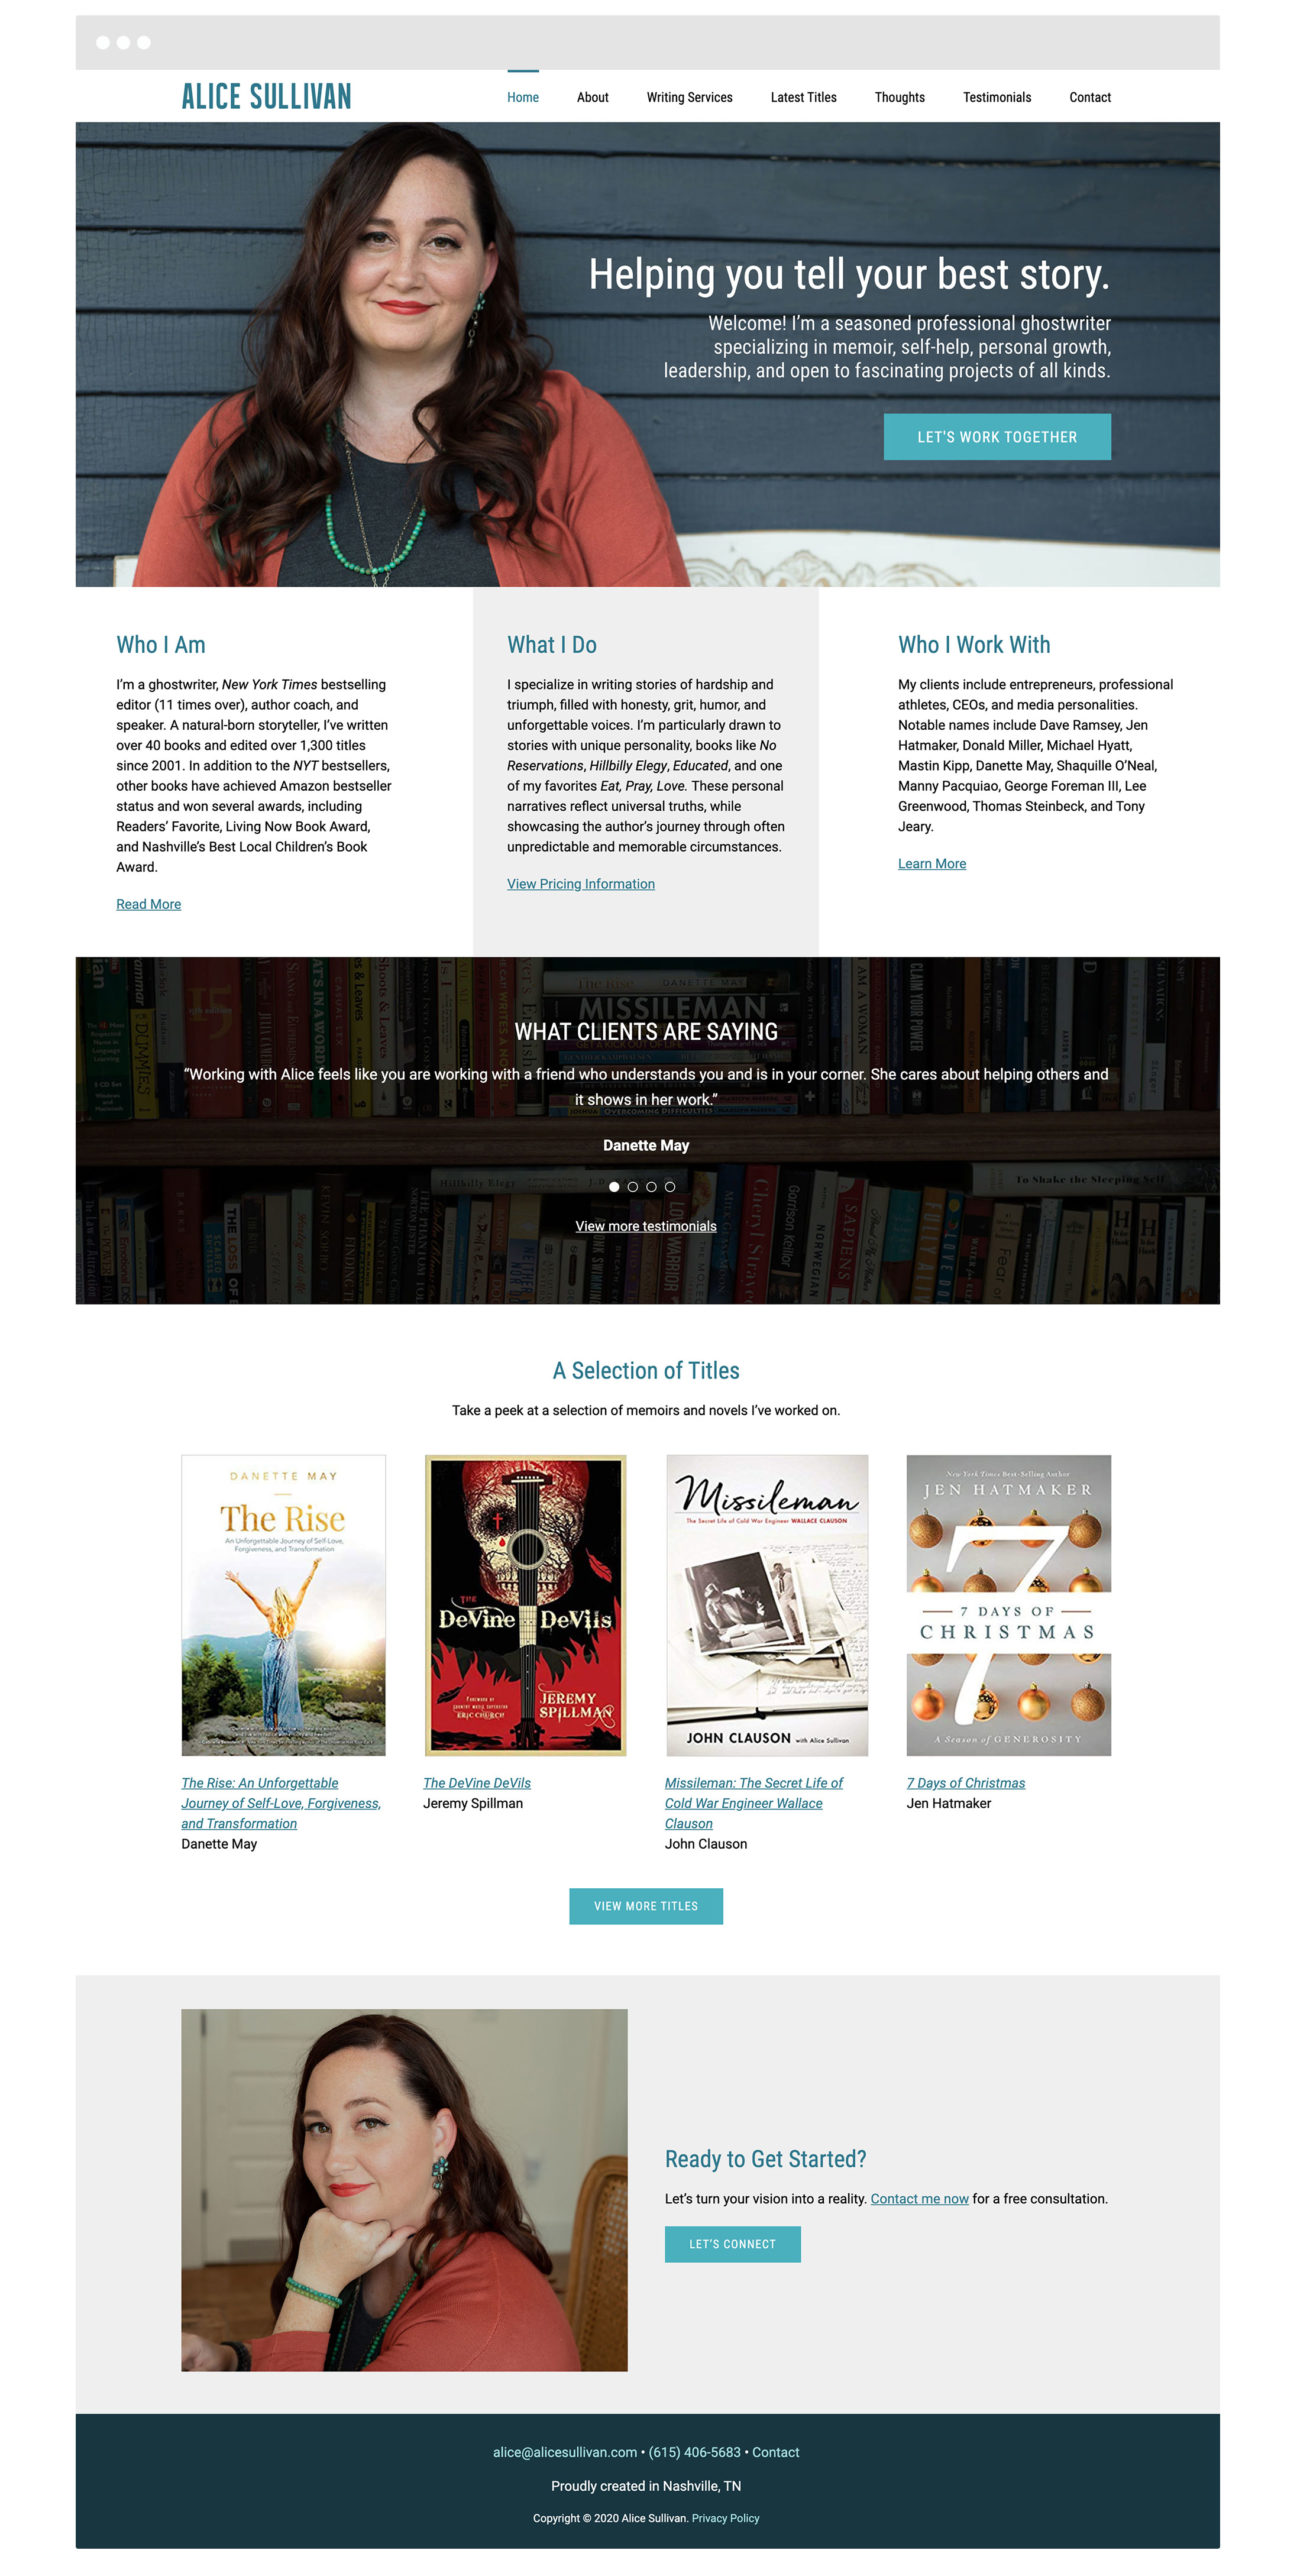 Mockup of the new Alice Sullivan WordPress website full homepage